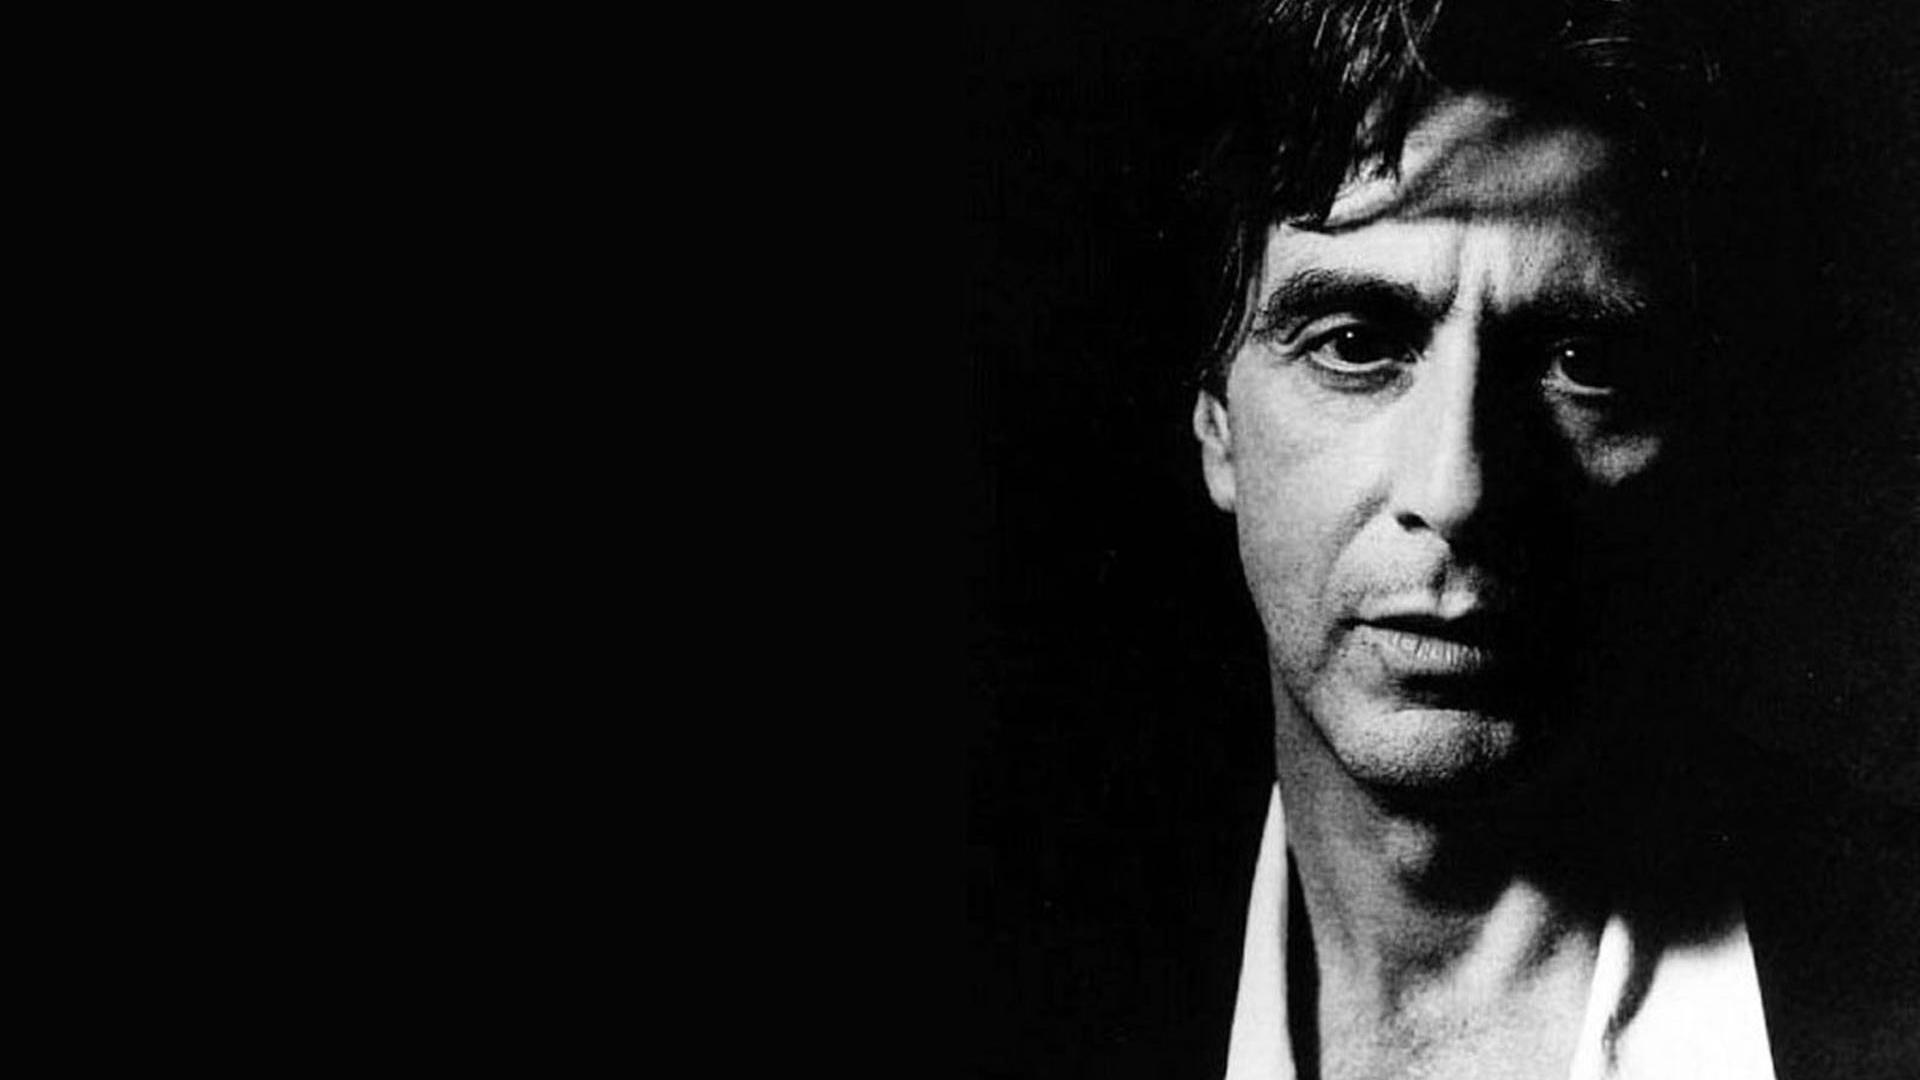 Al Pacino Wallpaper X